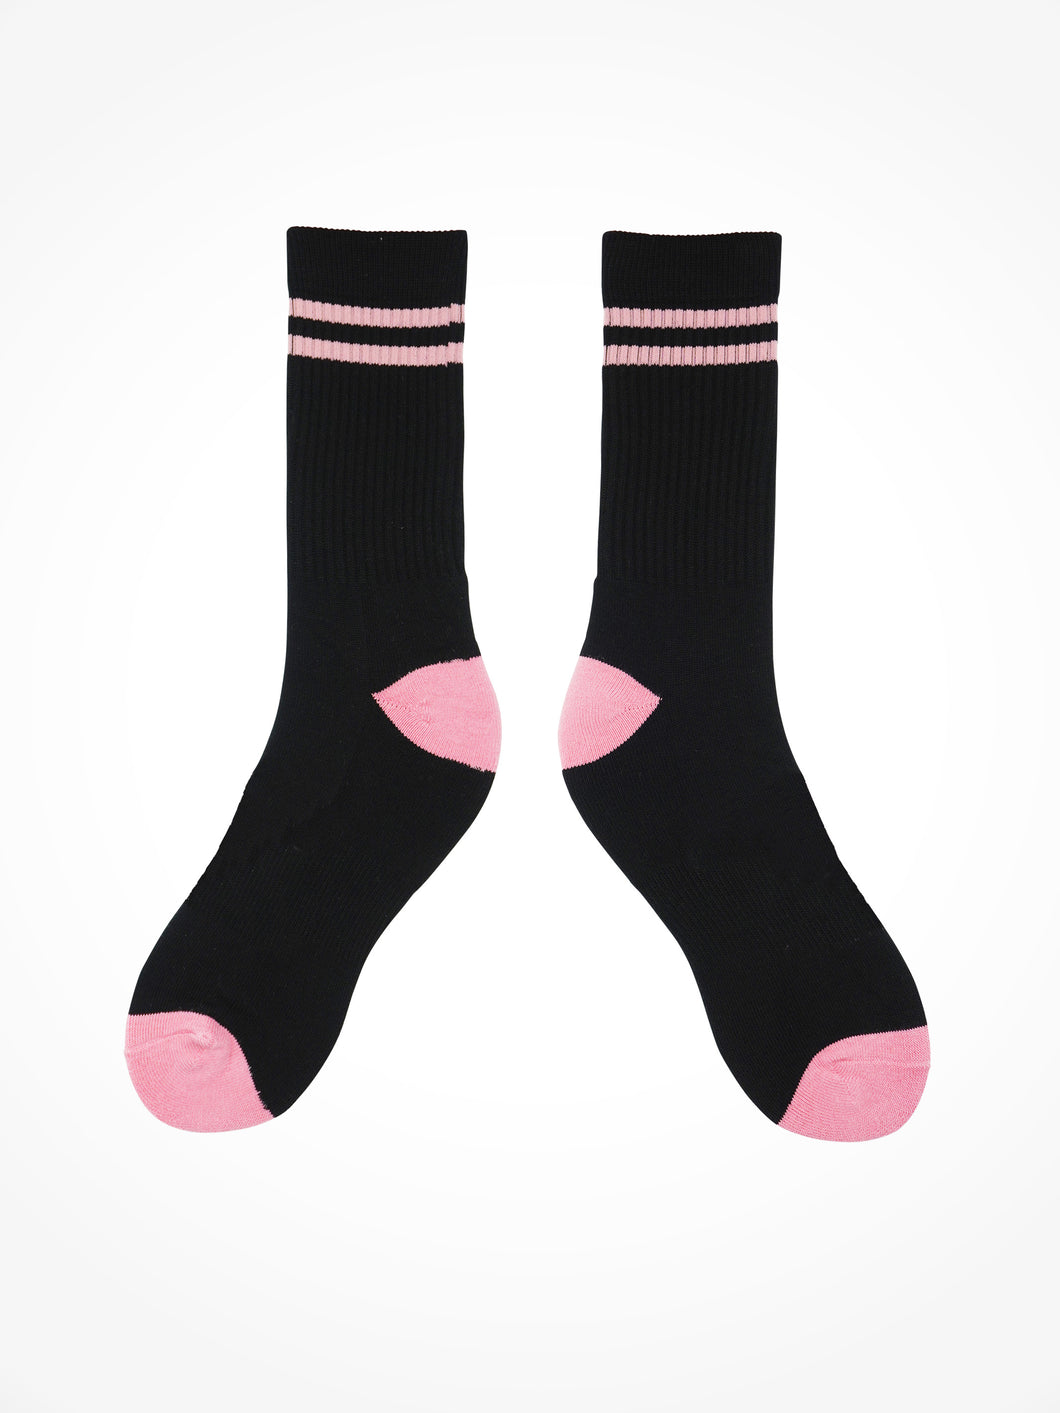 Black and Pink Socks